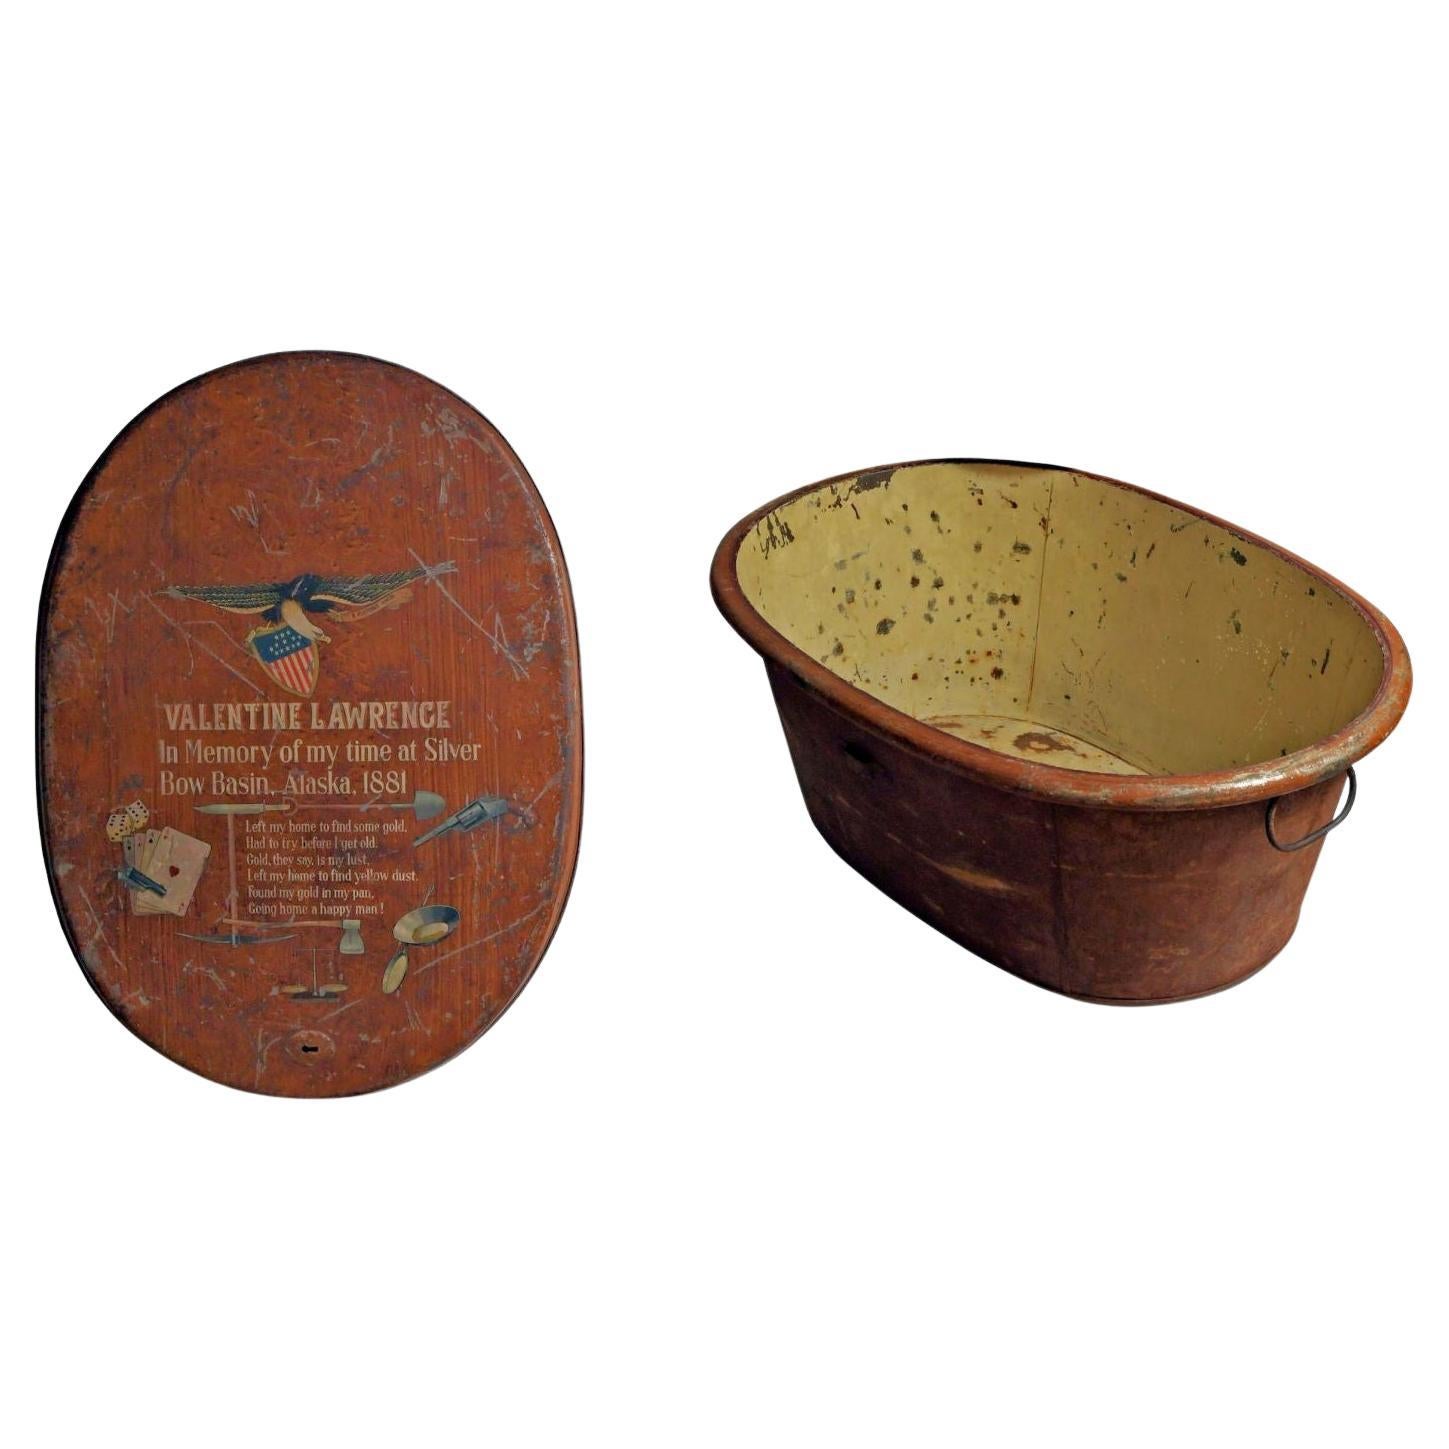 Antiker Alaska Gold Binsen-Badtuch / Truhe / Tisch Circa 1880er Jahre